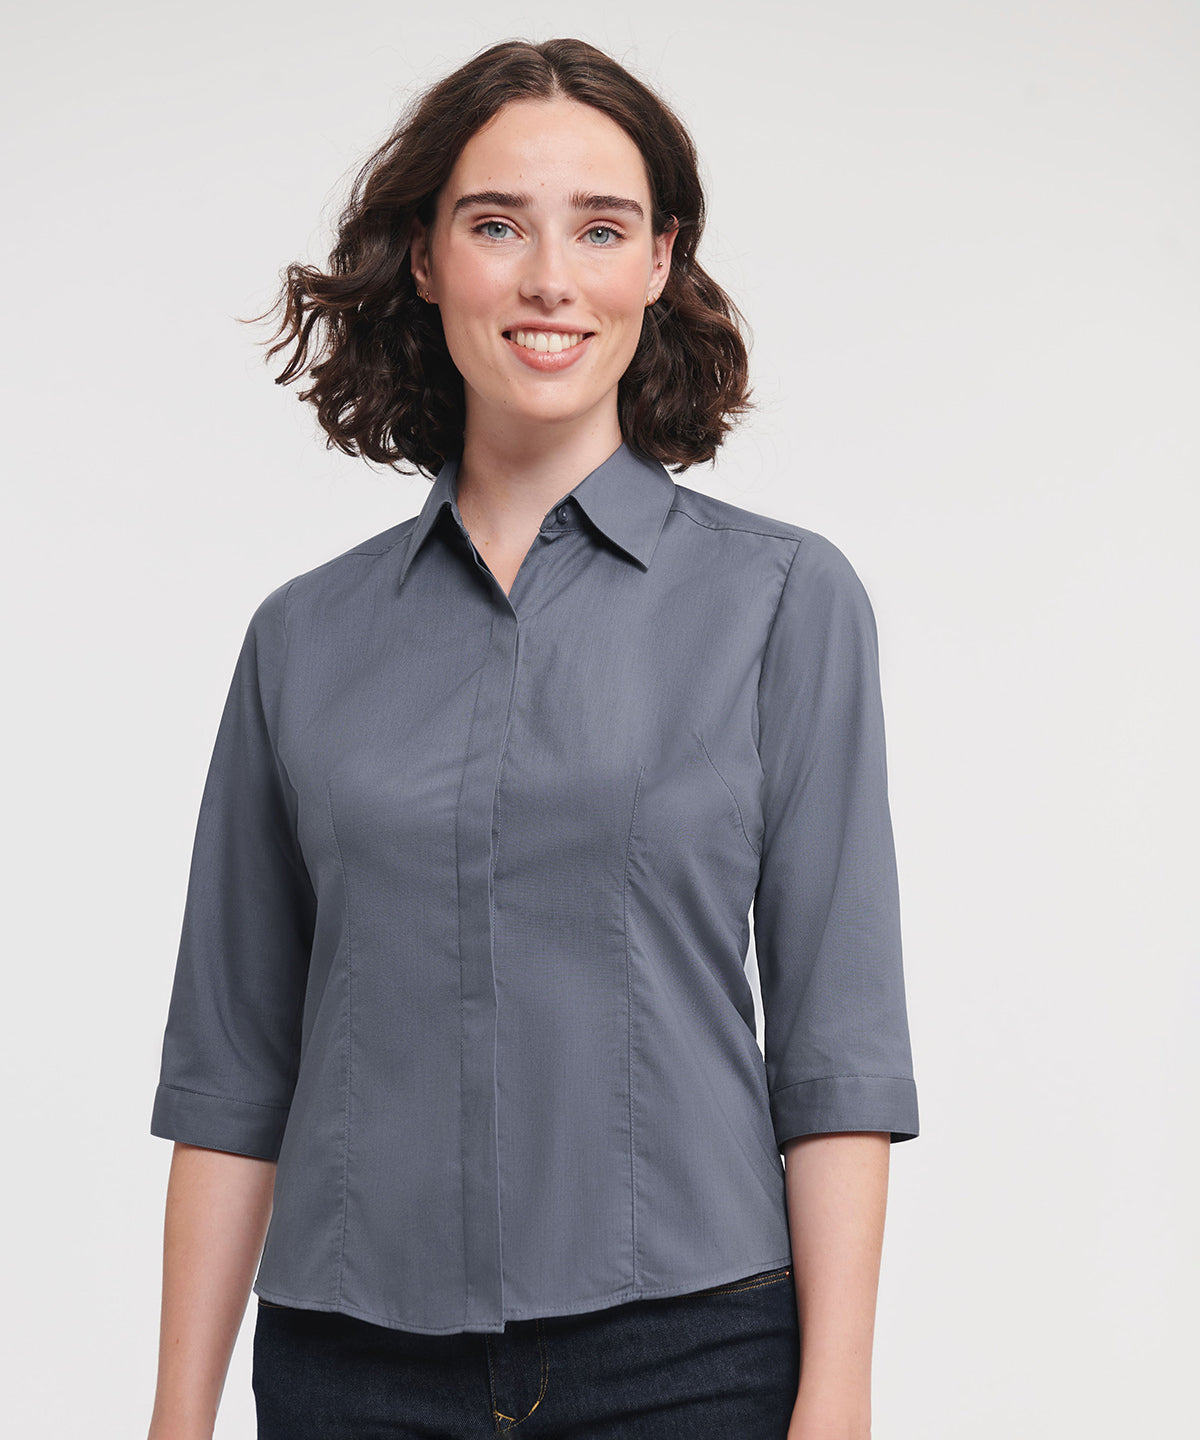 Bolir - Women's ¾ Sleeve Polycotton Easycare Fitted Poplin Shirt